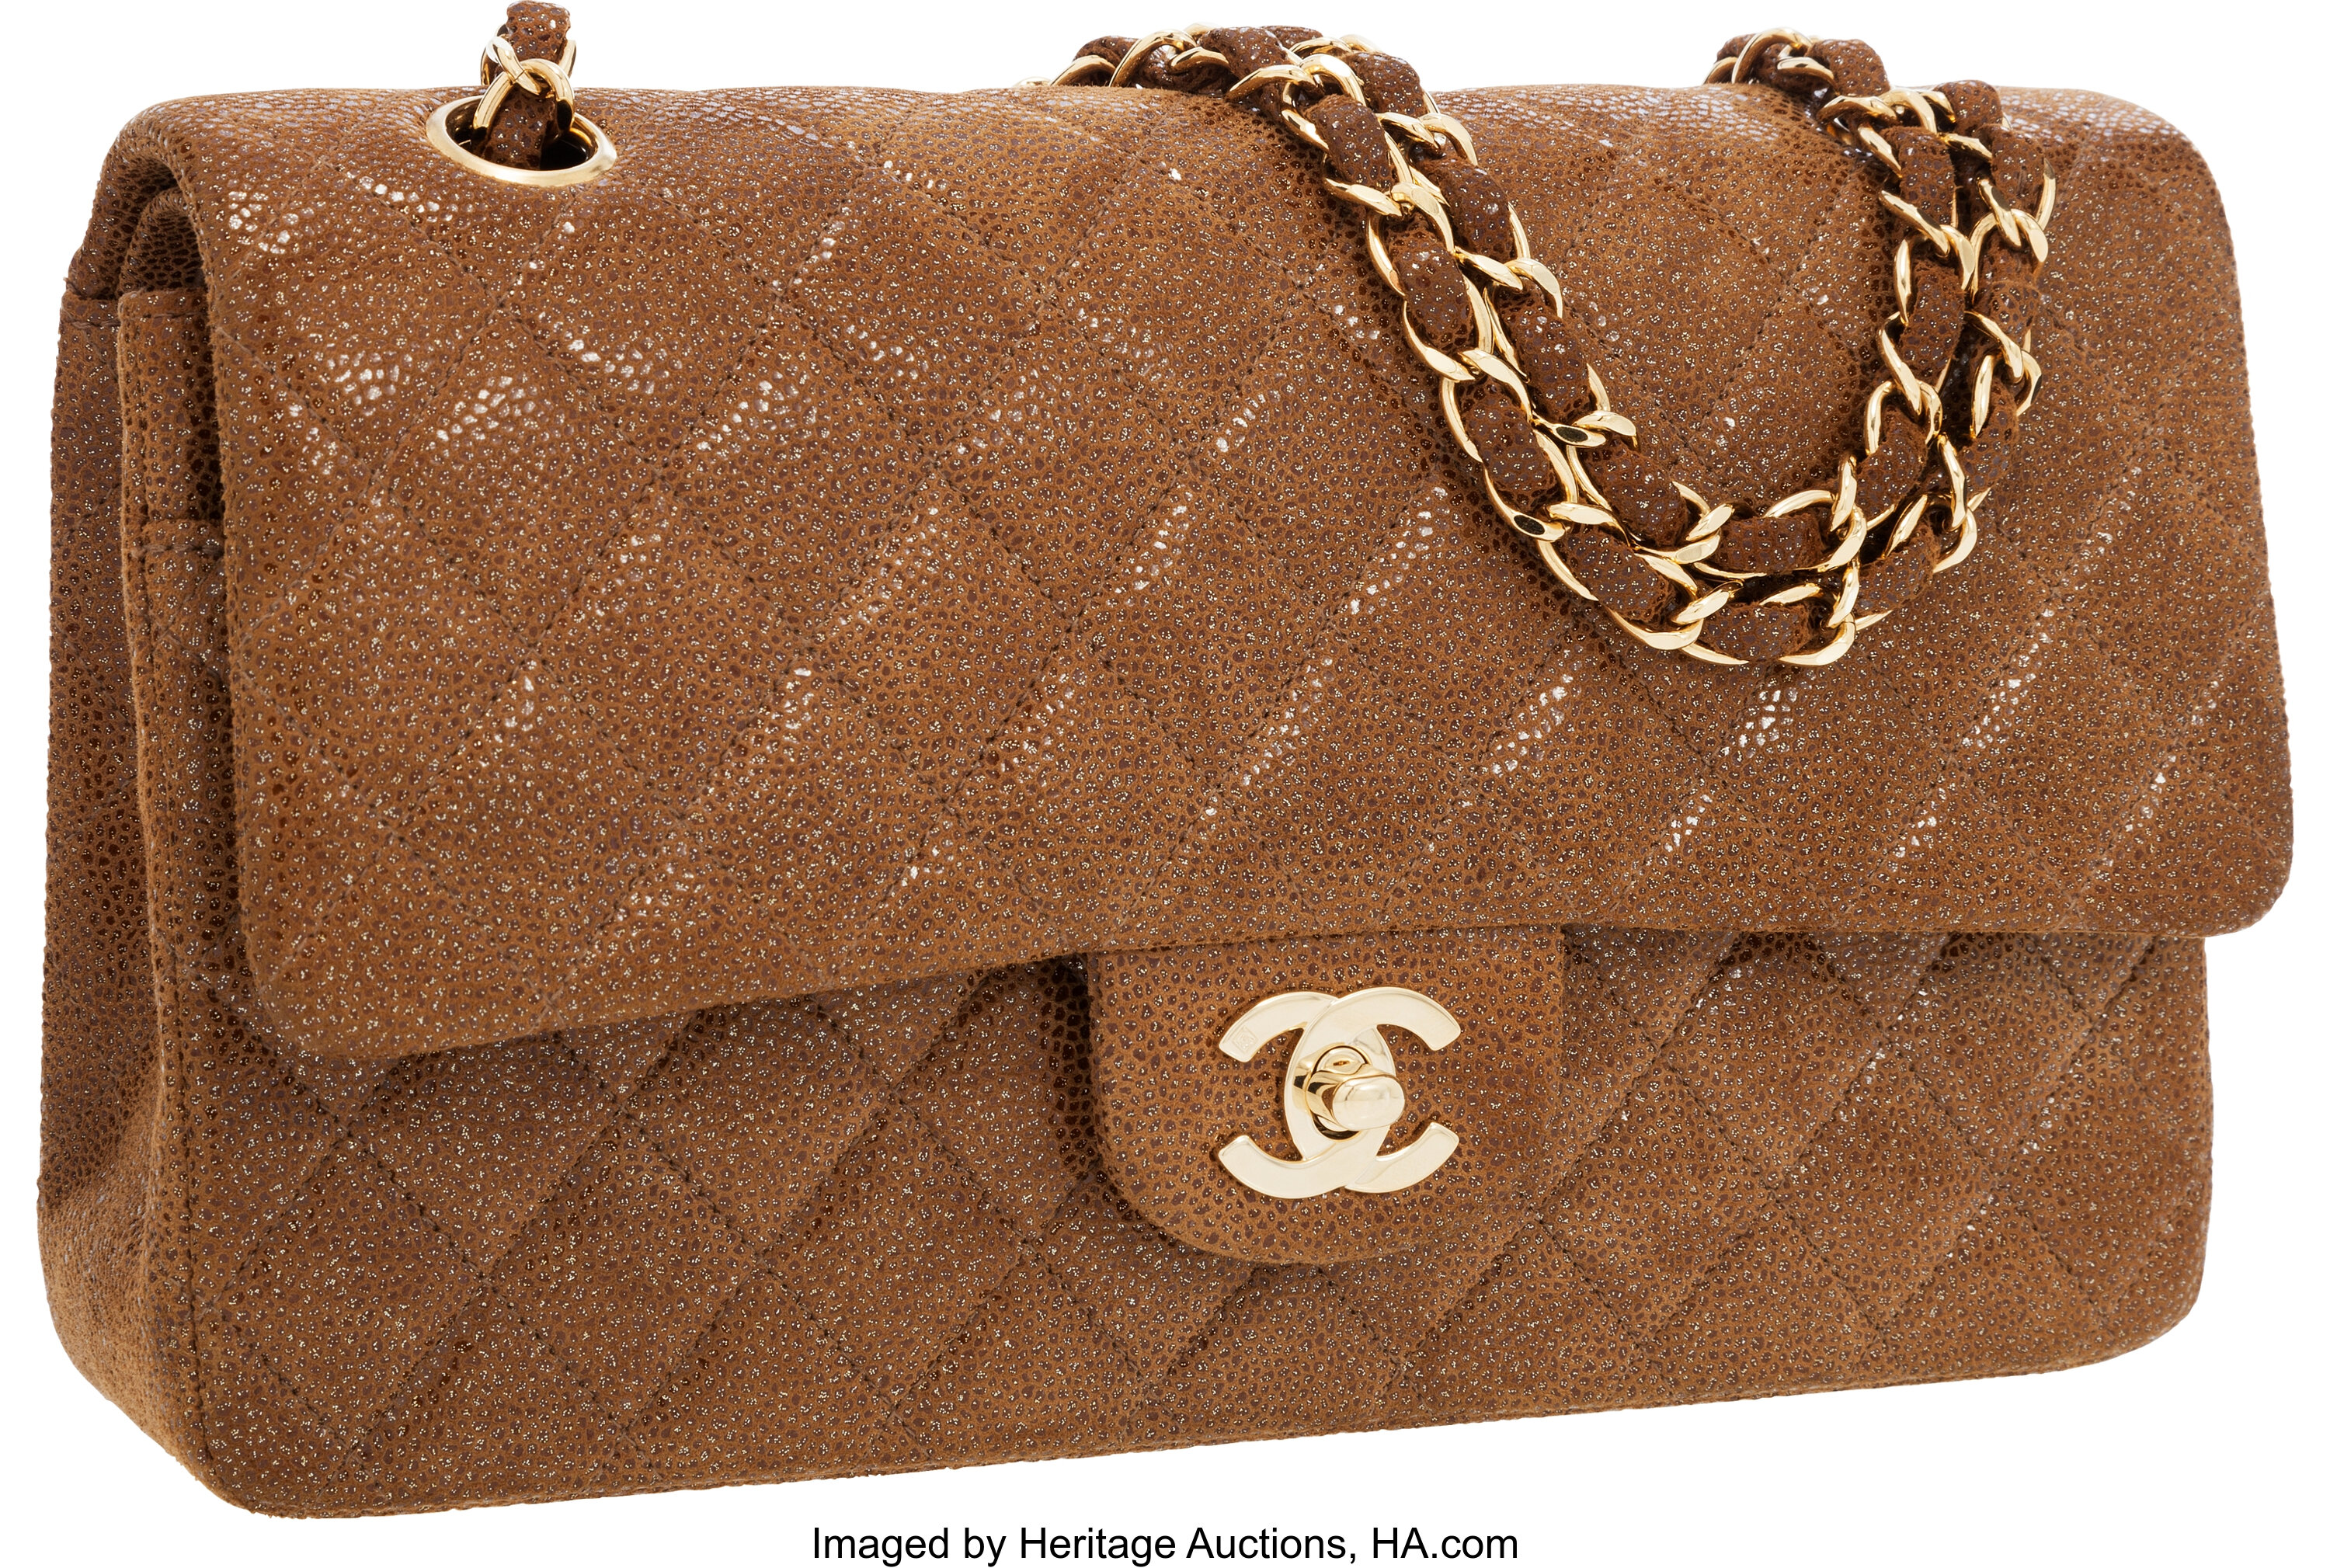 Chanel Light Brown Caviar Suede Leather Medium Double Flap Bag